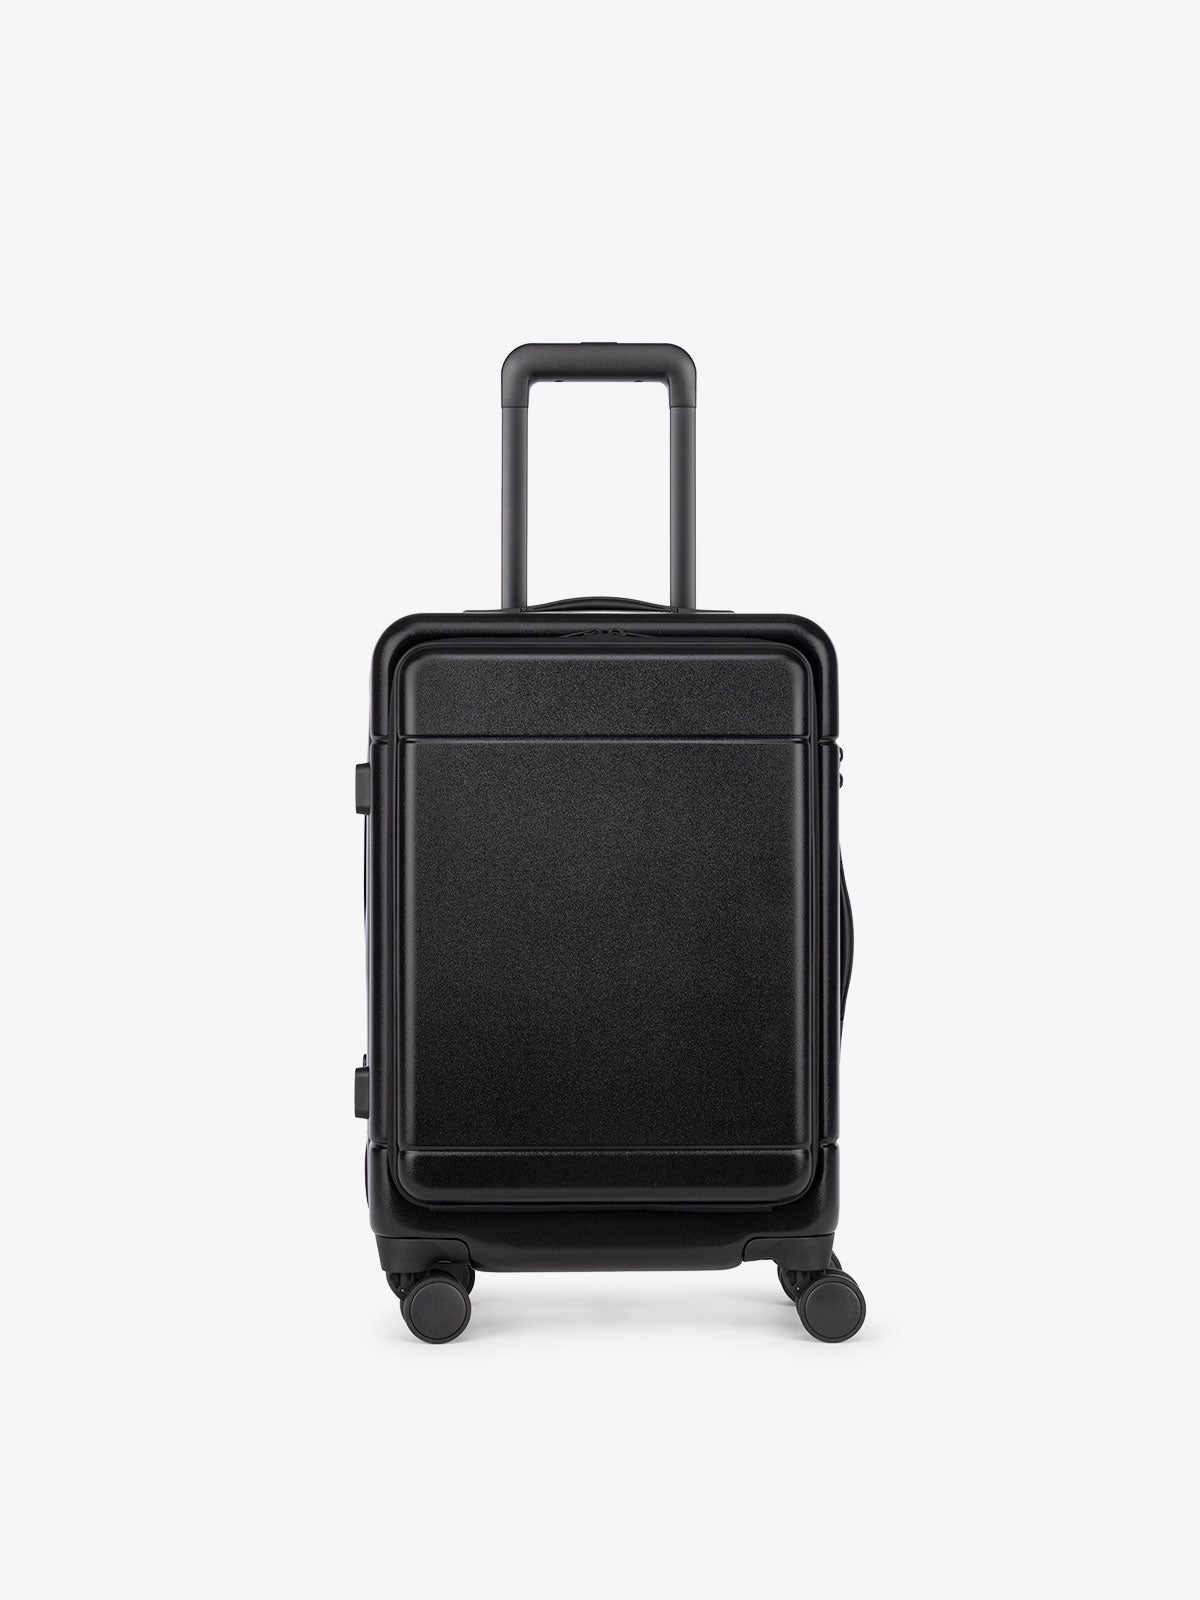 CALPAK Hue hardside carry-on suitcase with laptop pocket in black color